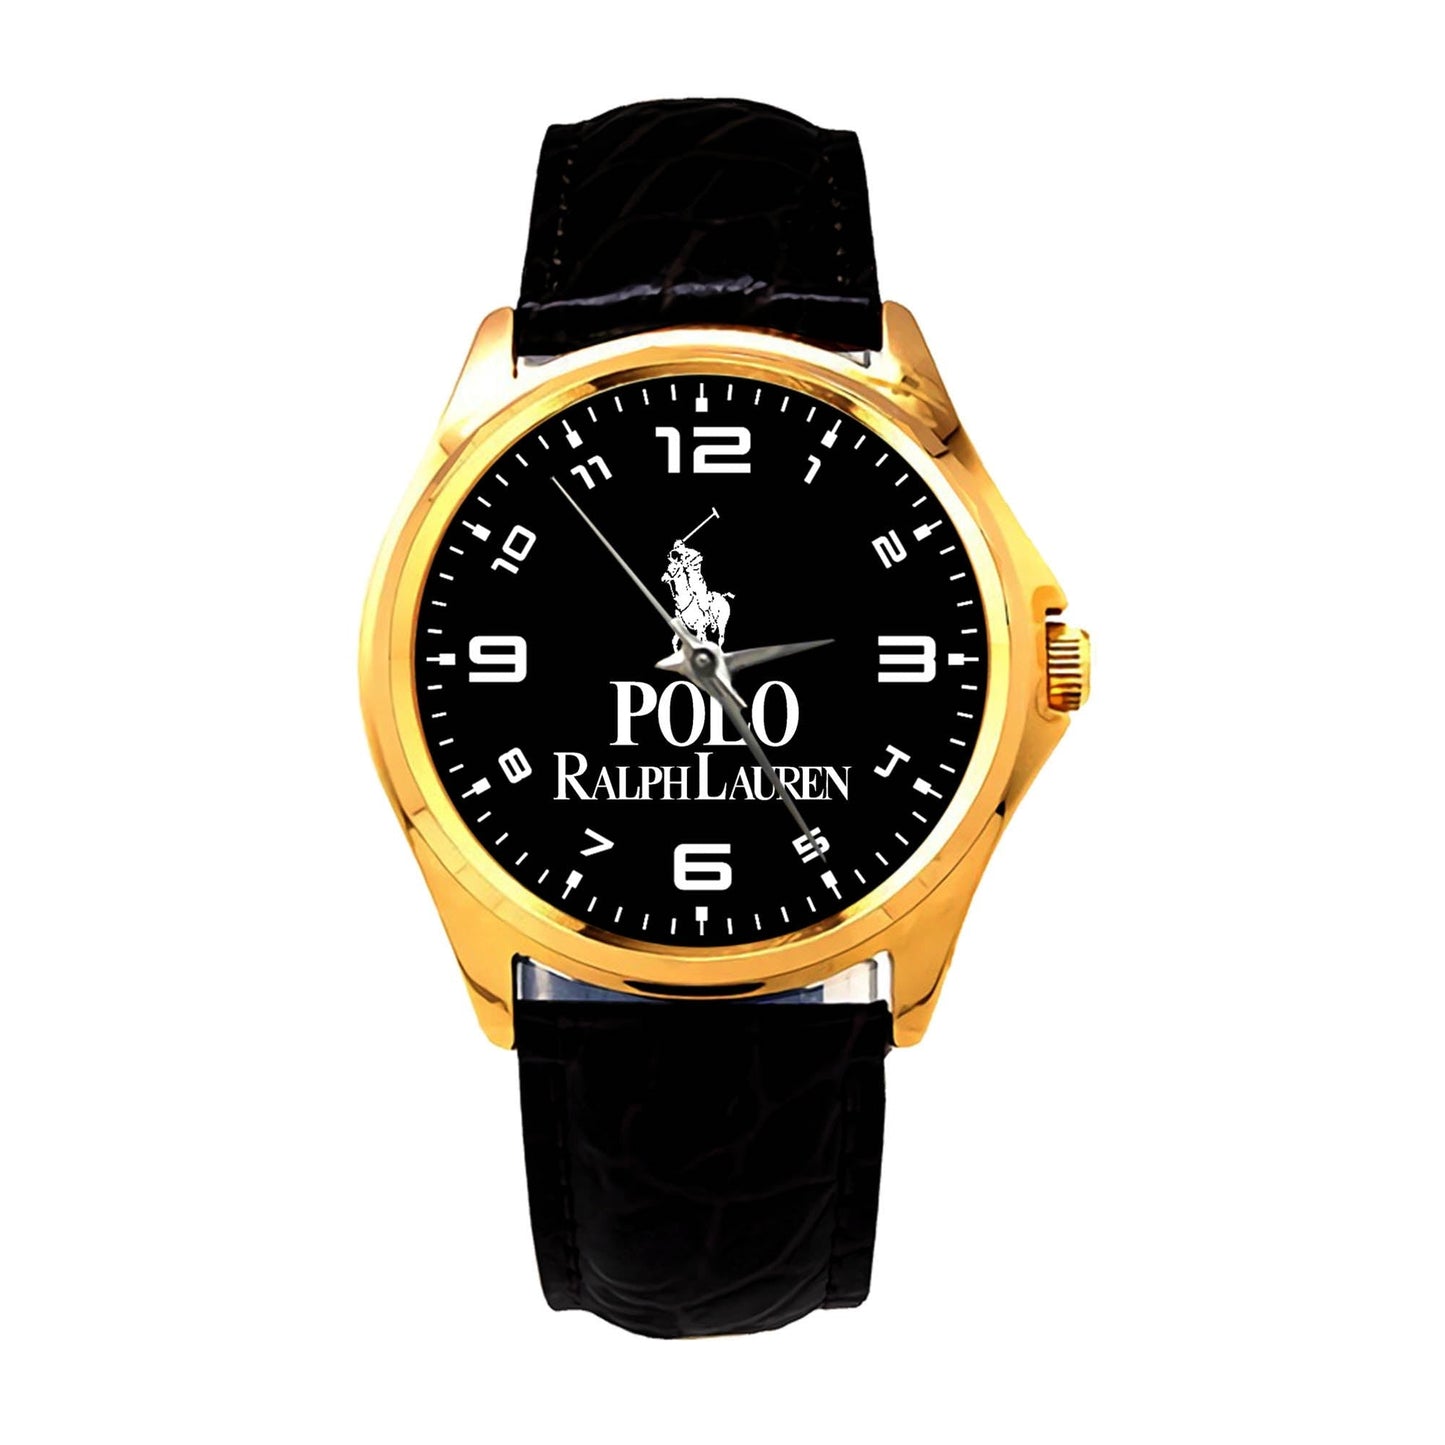 Polo Ralph Lauren Watches KP652